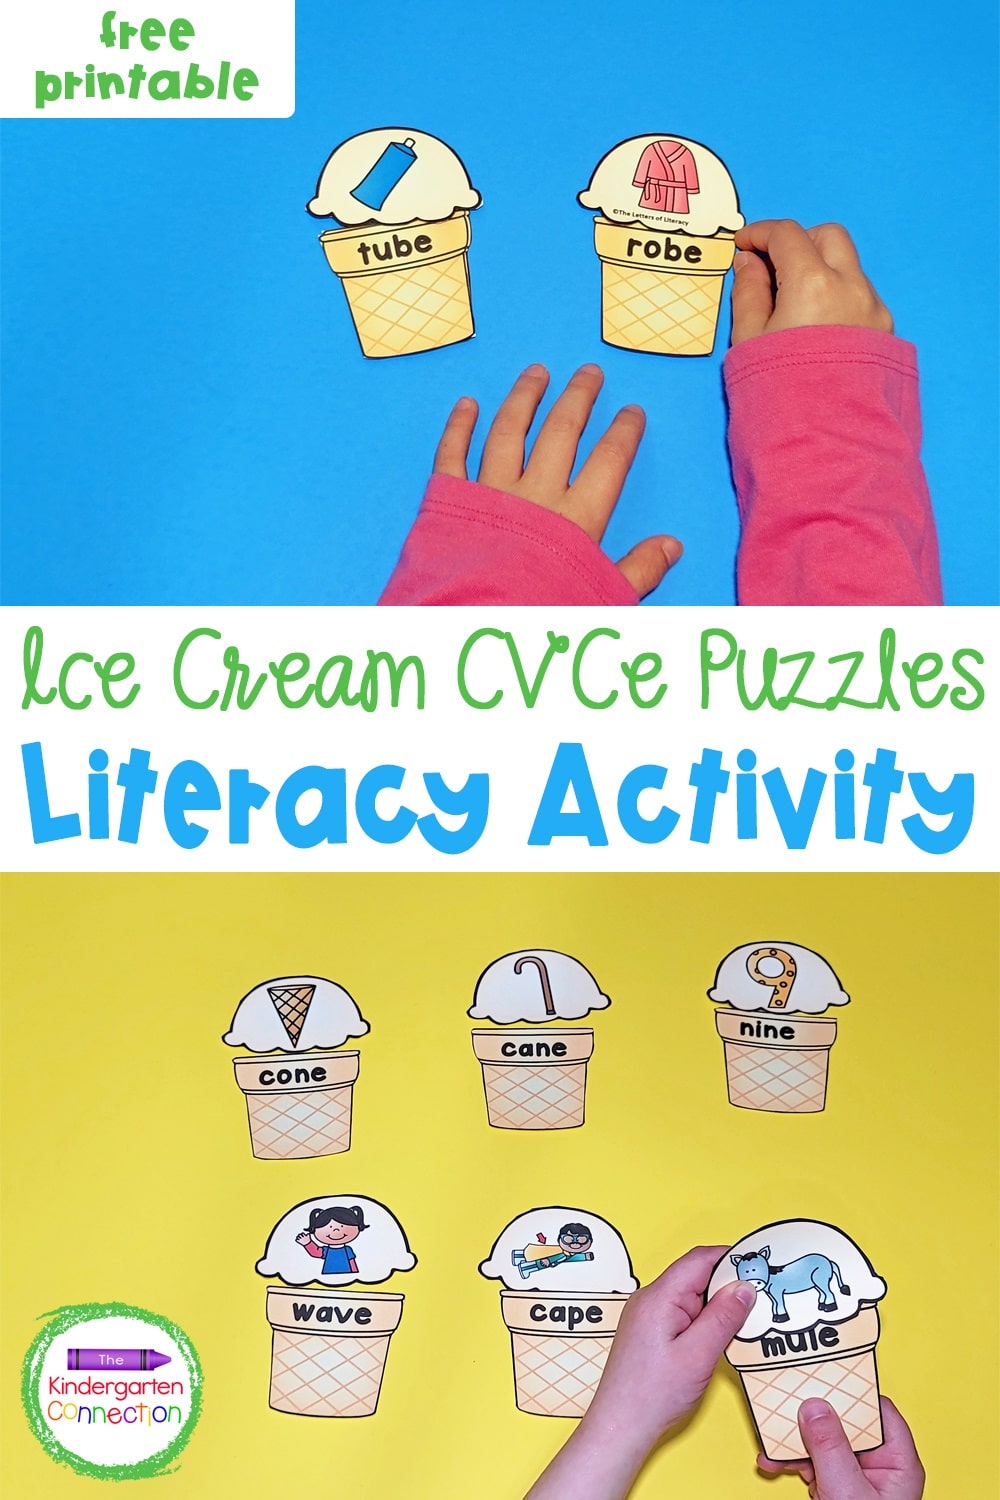 Ice Cream CVCe Puzzles